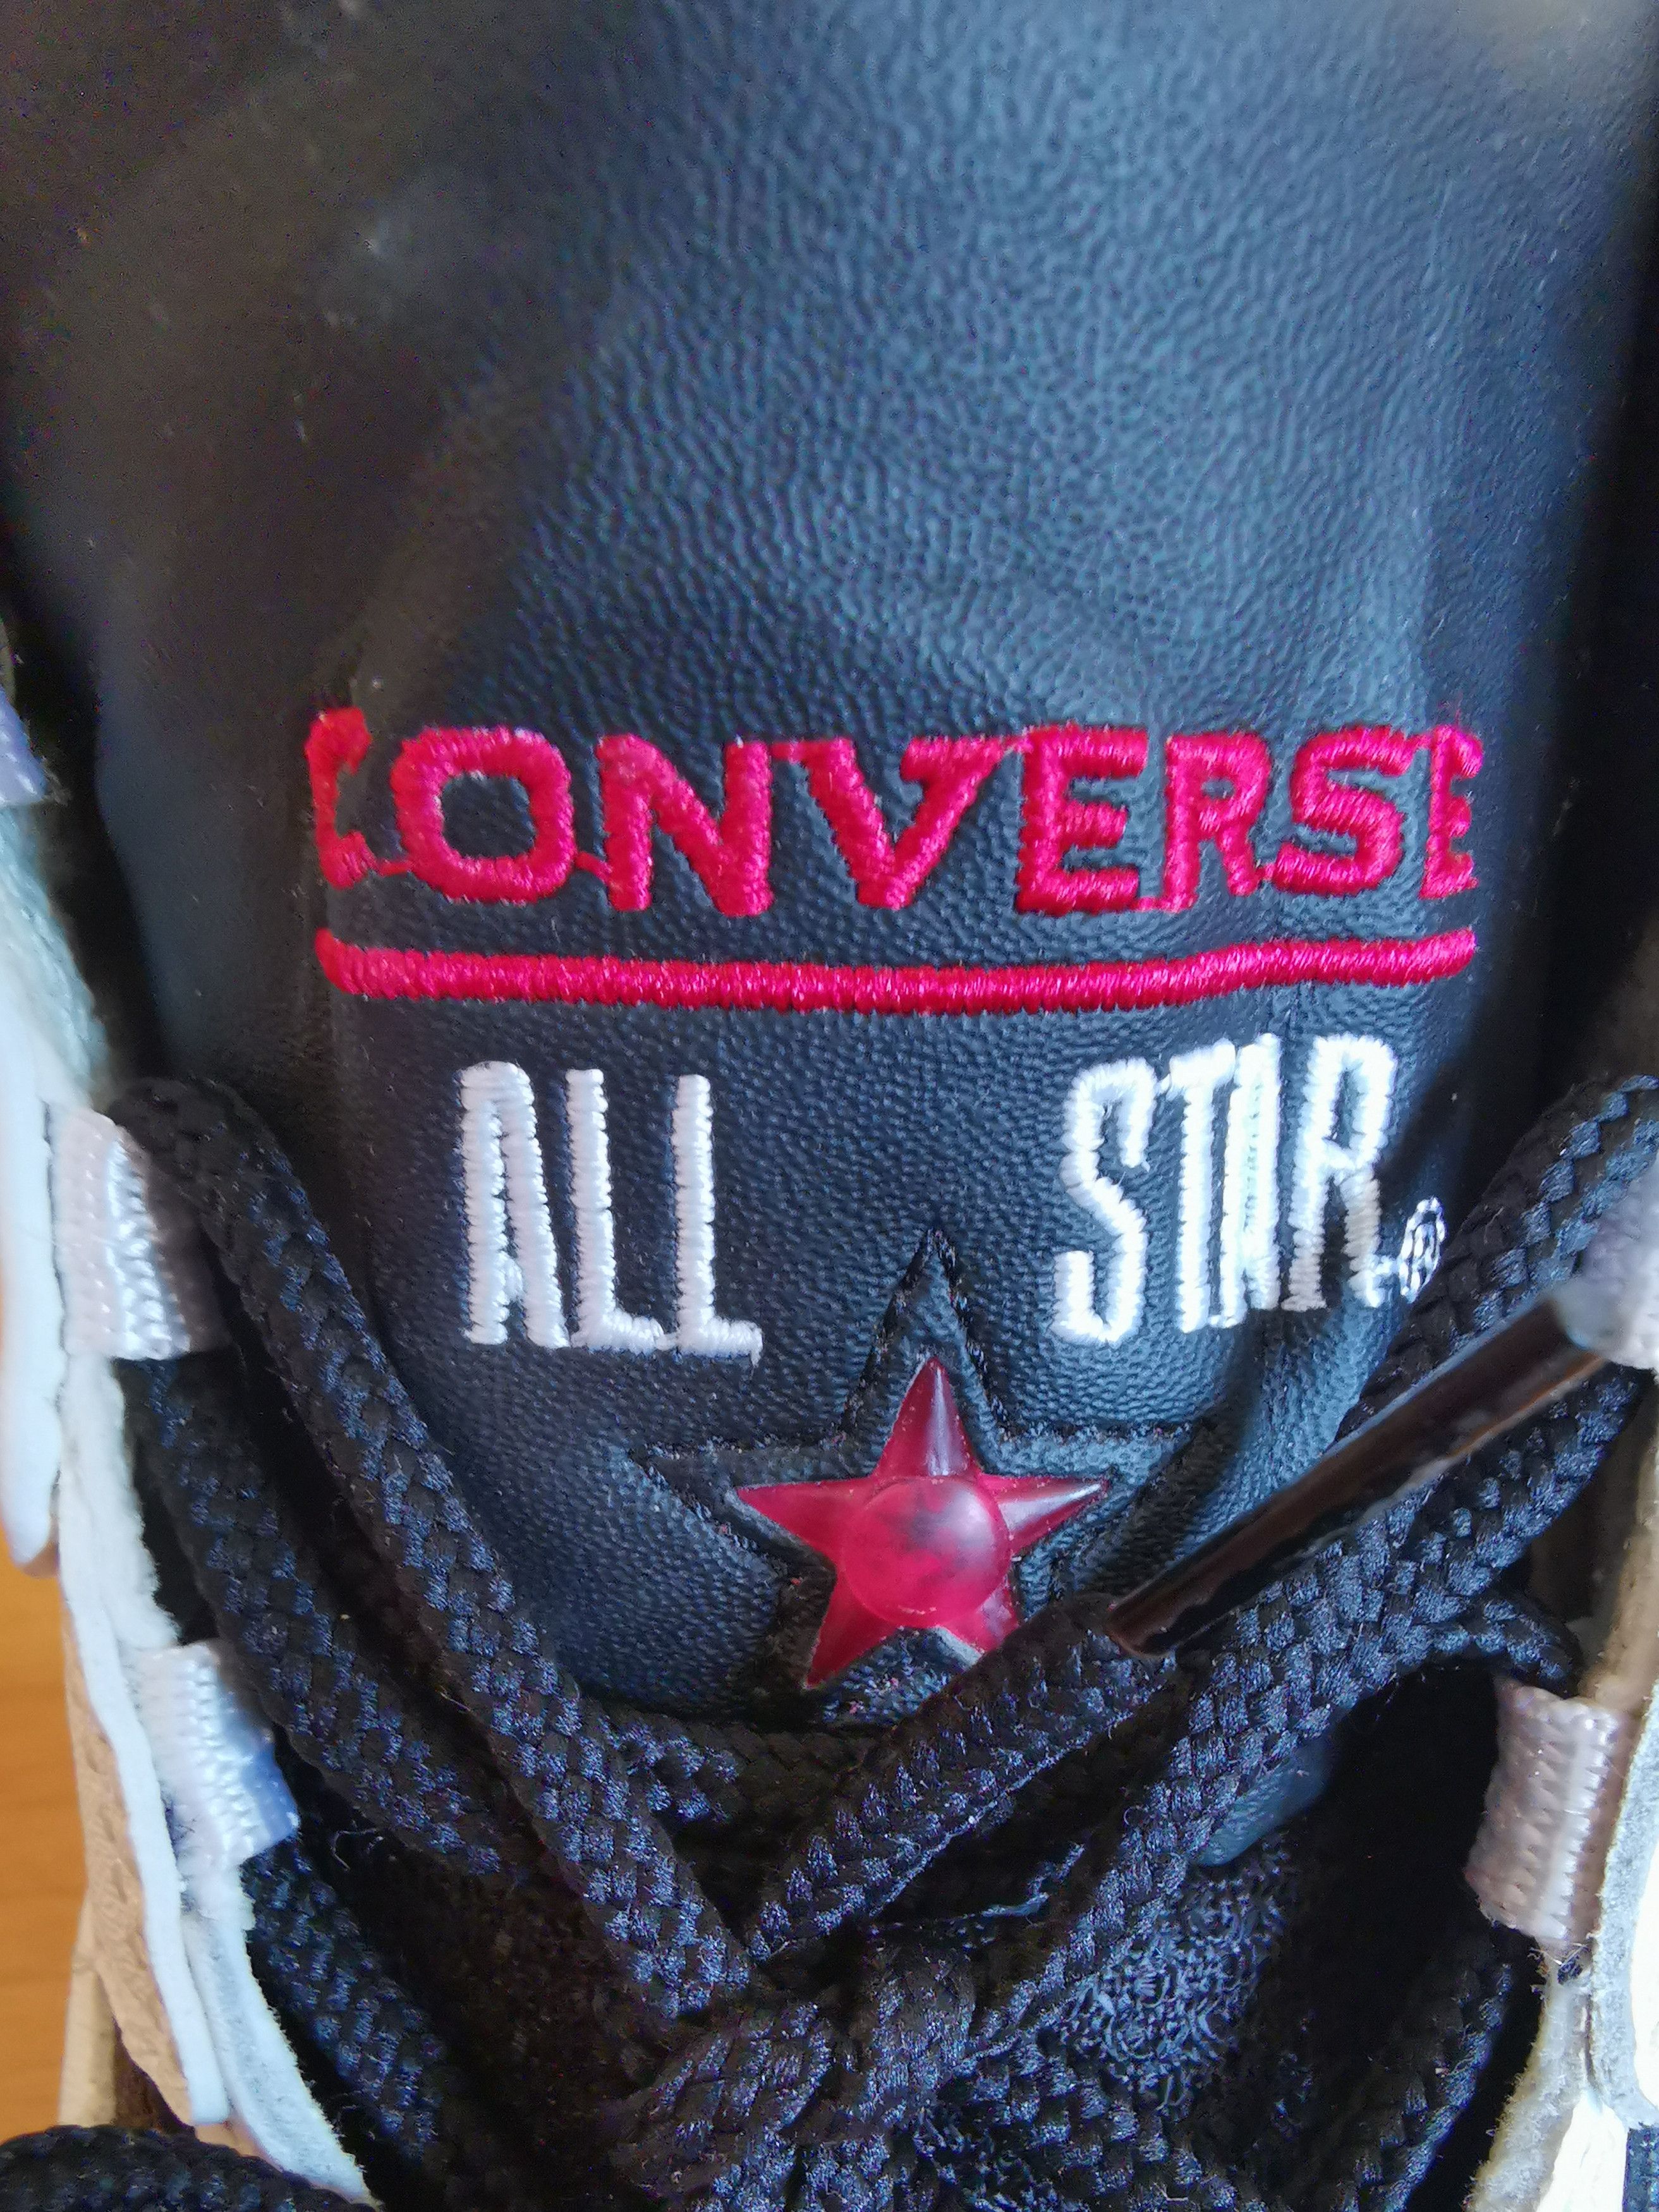 Converse Dennis Rodman Converse All Star 91 basketball Size US 12 / EU 45 - 4 Thumbnail